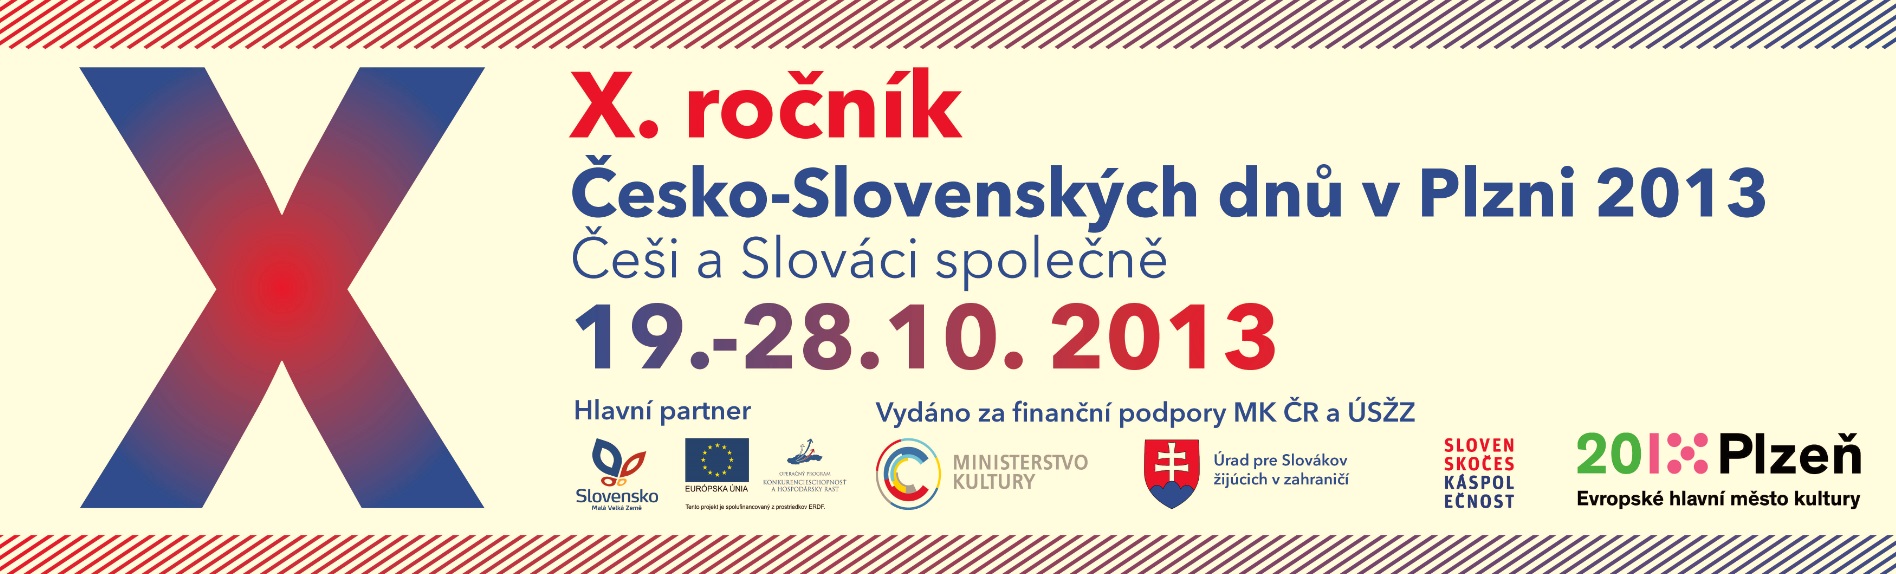 ESKO - SLOVENSK DNI V PLZNI 2013 - 10. ronk